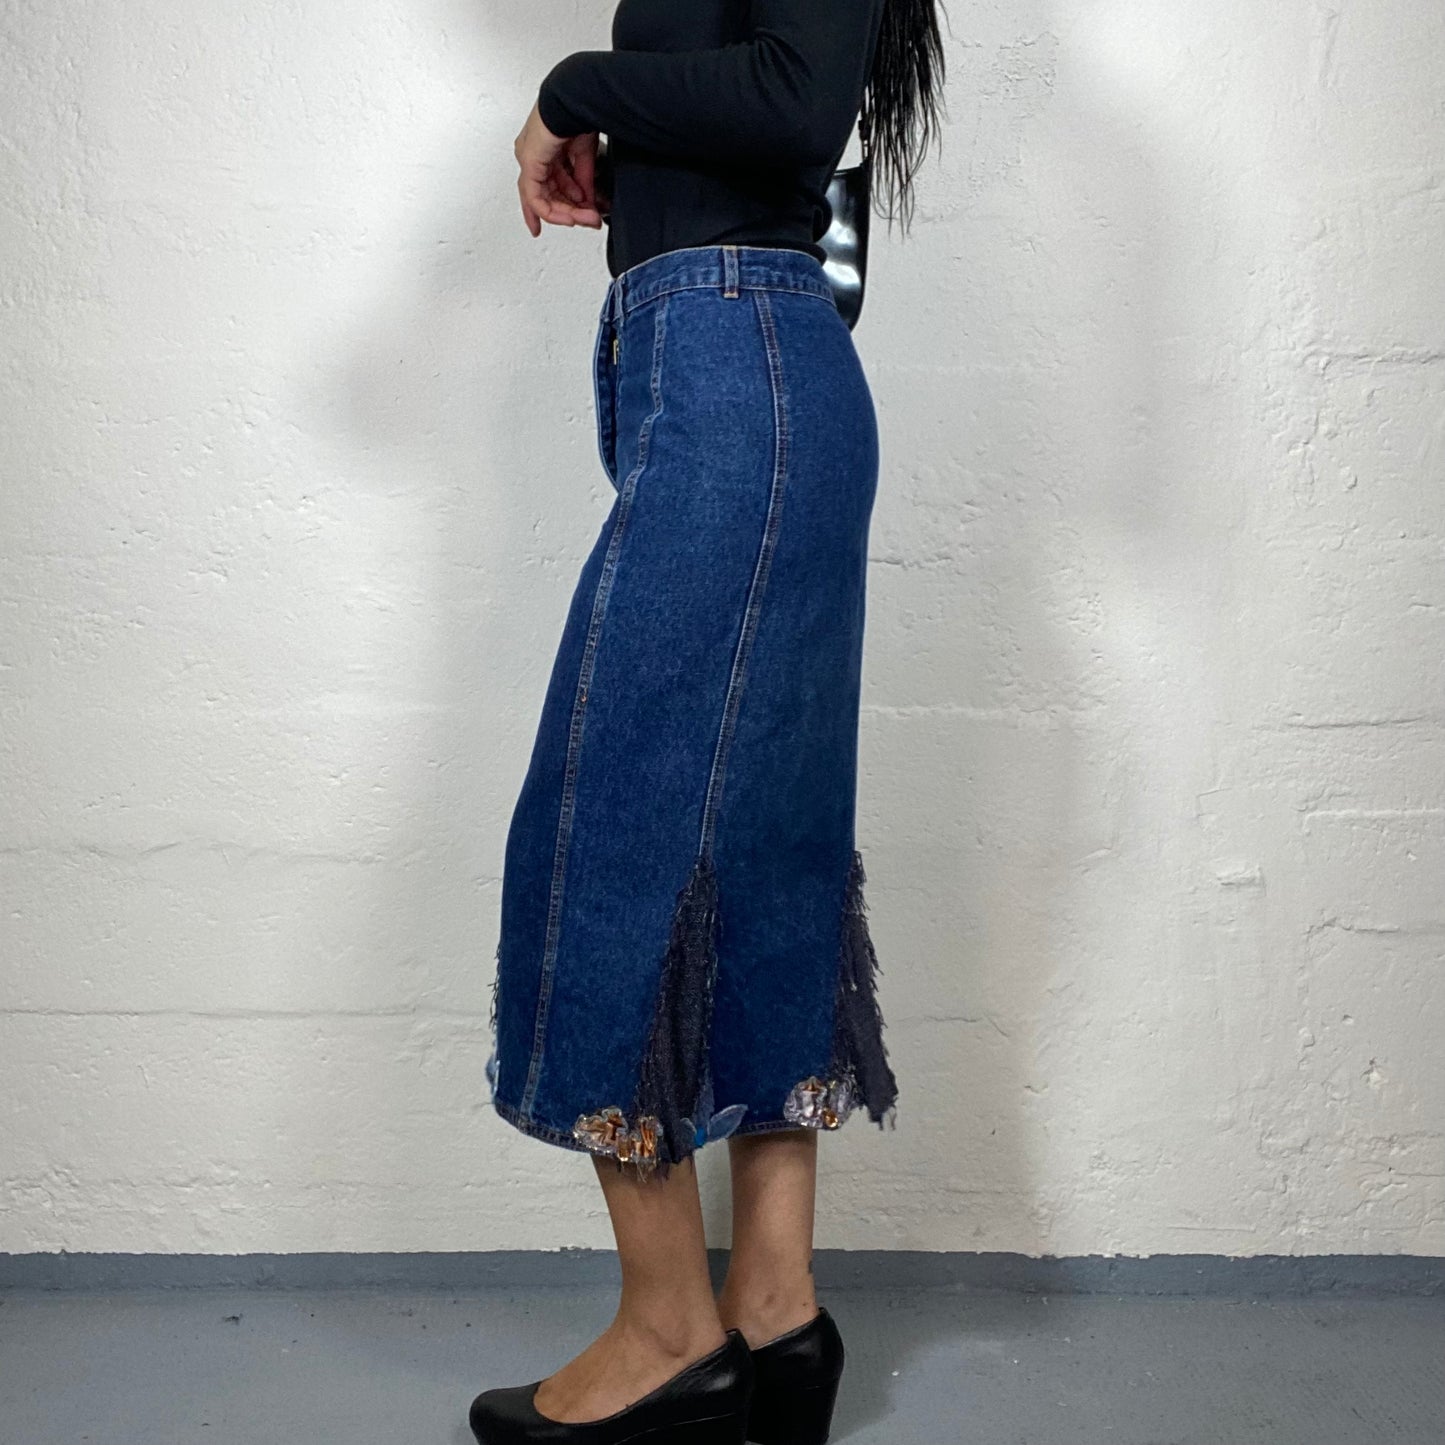 Vintage 2000's Boho Girl Blue Denim Midi Skirt with Floral Bottom Embroidery (S)